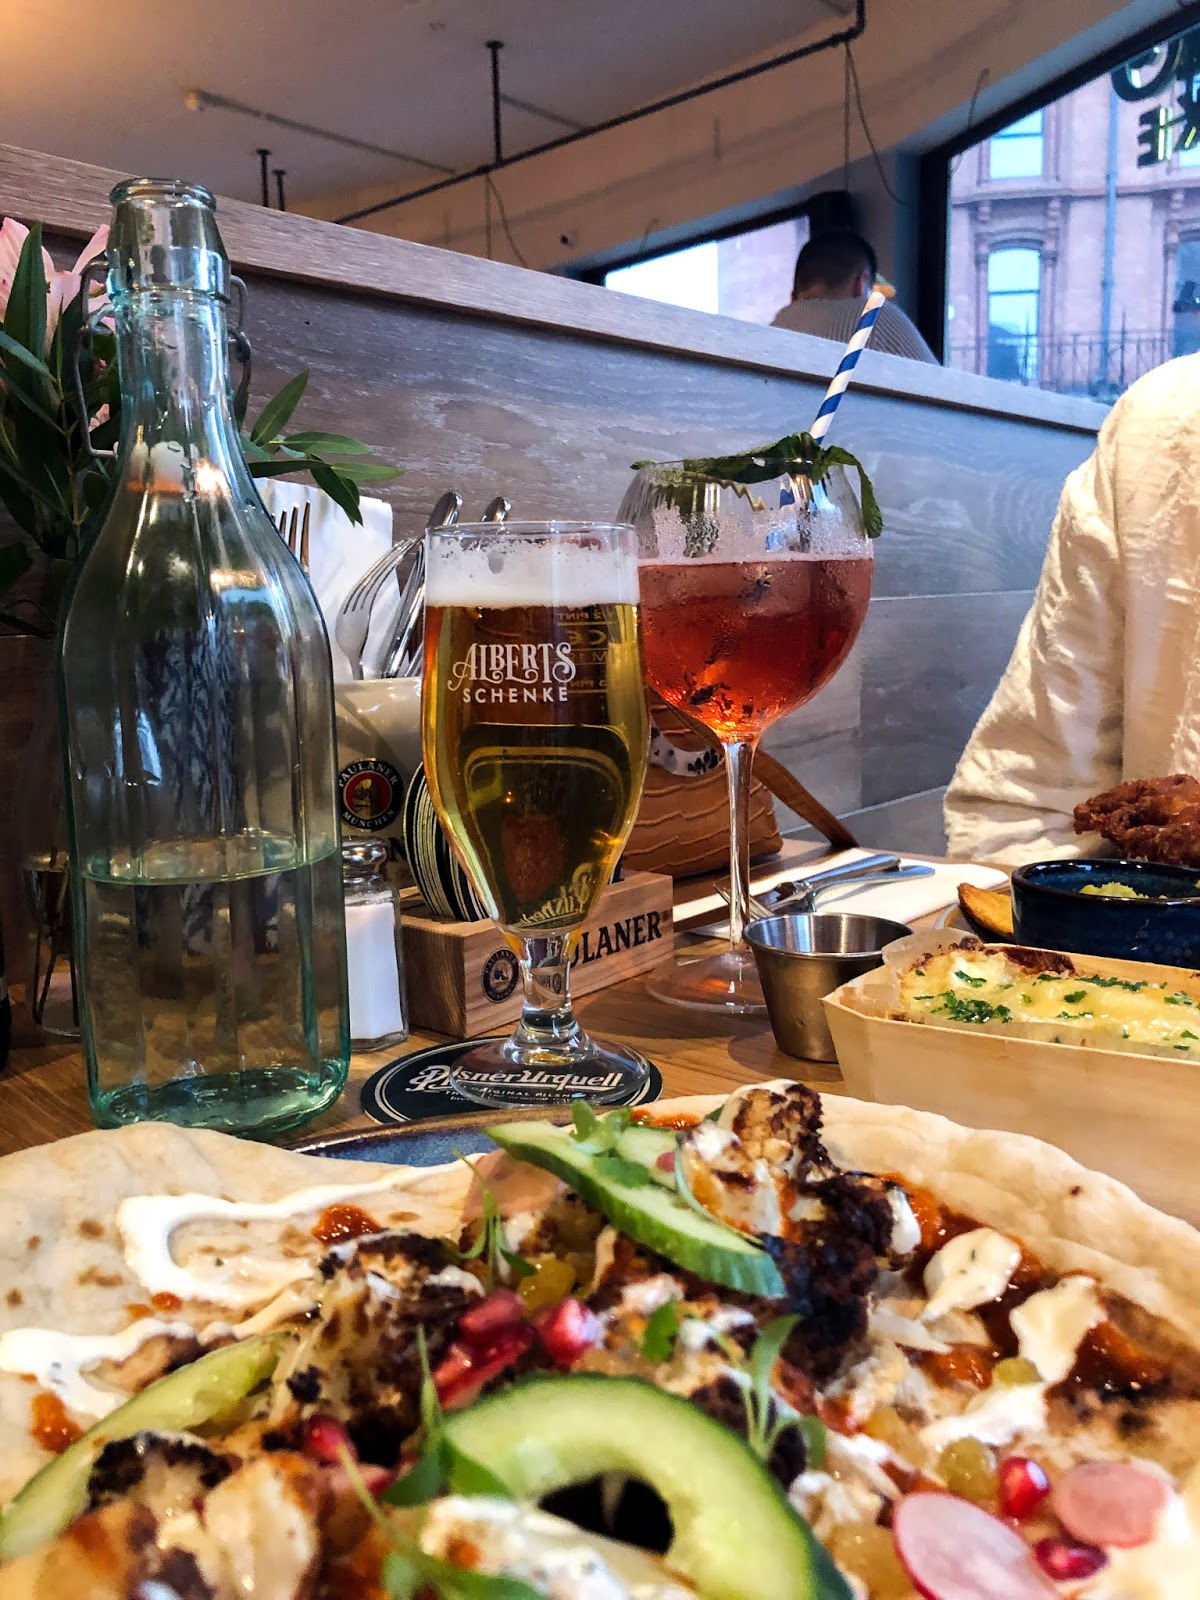 food and German beer in alberts schenke bar and restaurant liverpool